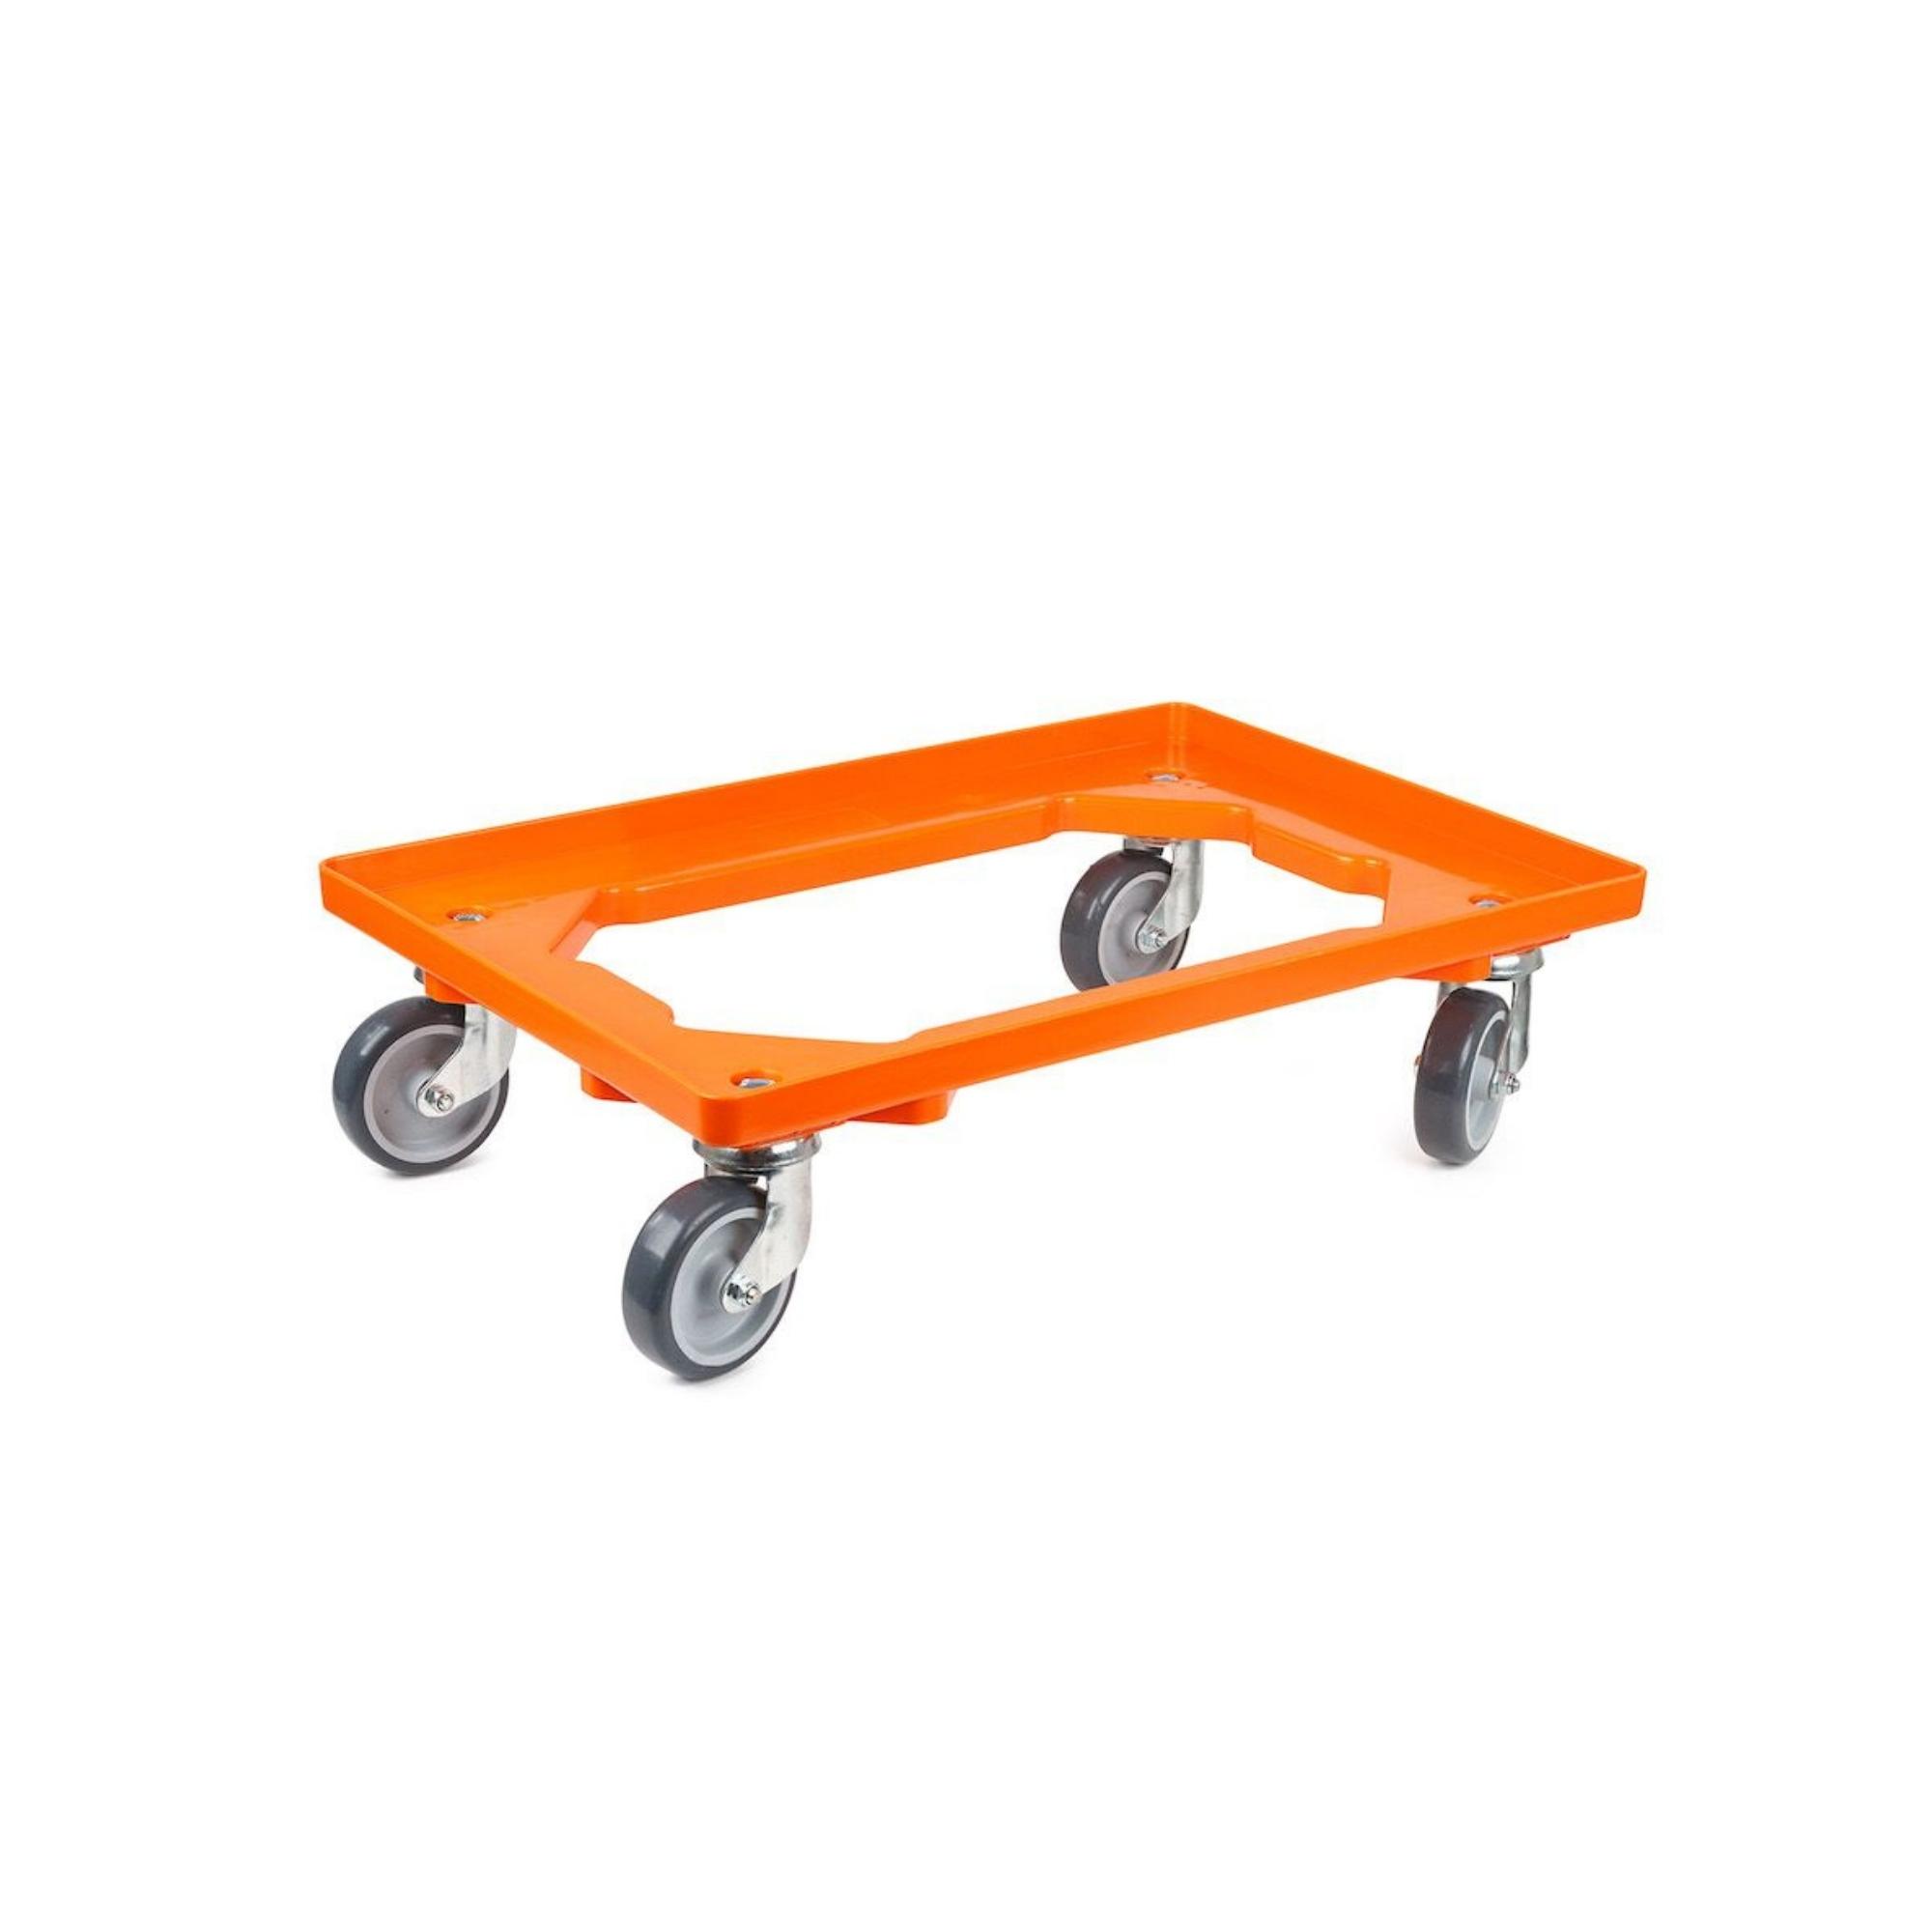 Transportroller für Euroboxen 60x40cm mit Gummiräder orange | Offenes Deck | 4 Lenkrollen | Traglast 300kg | Kistenroller Logistikroller Rollwagen Profi-Fahrgestell